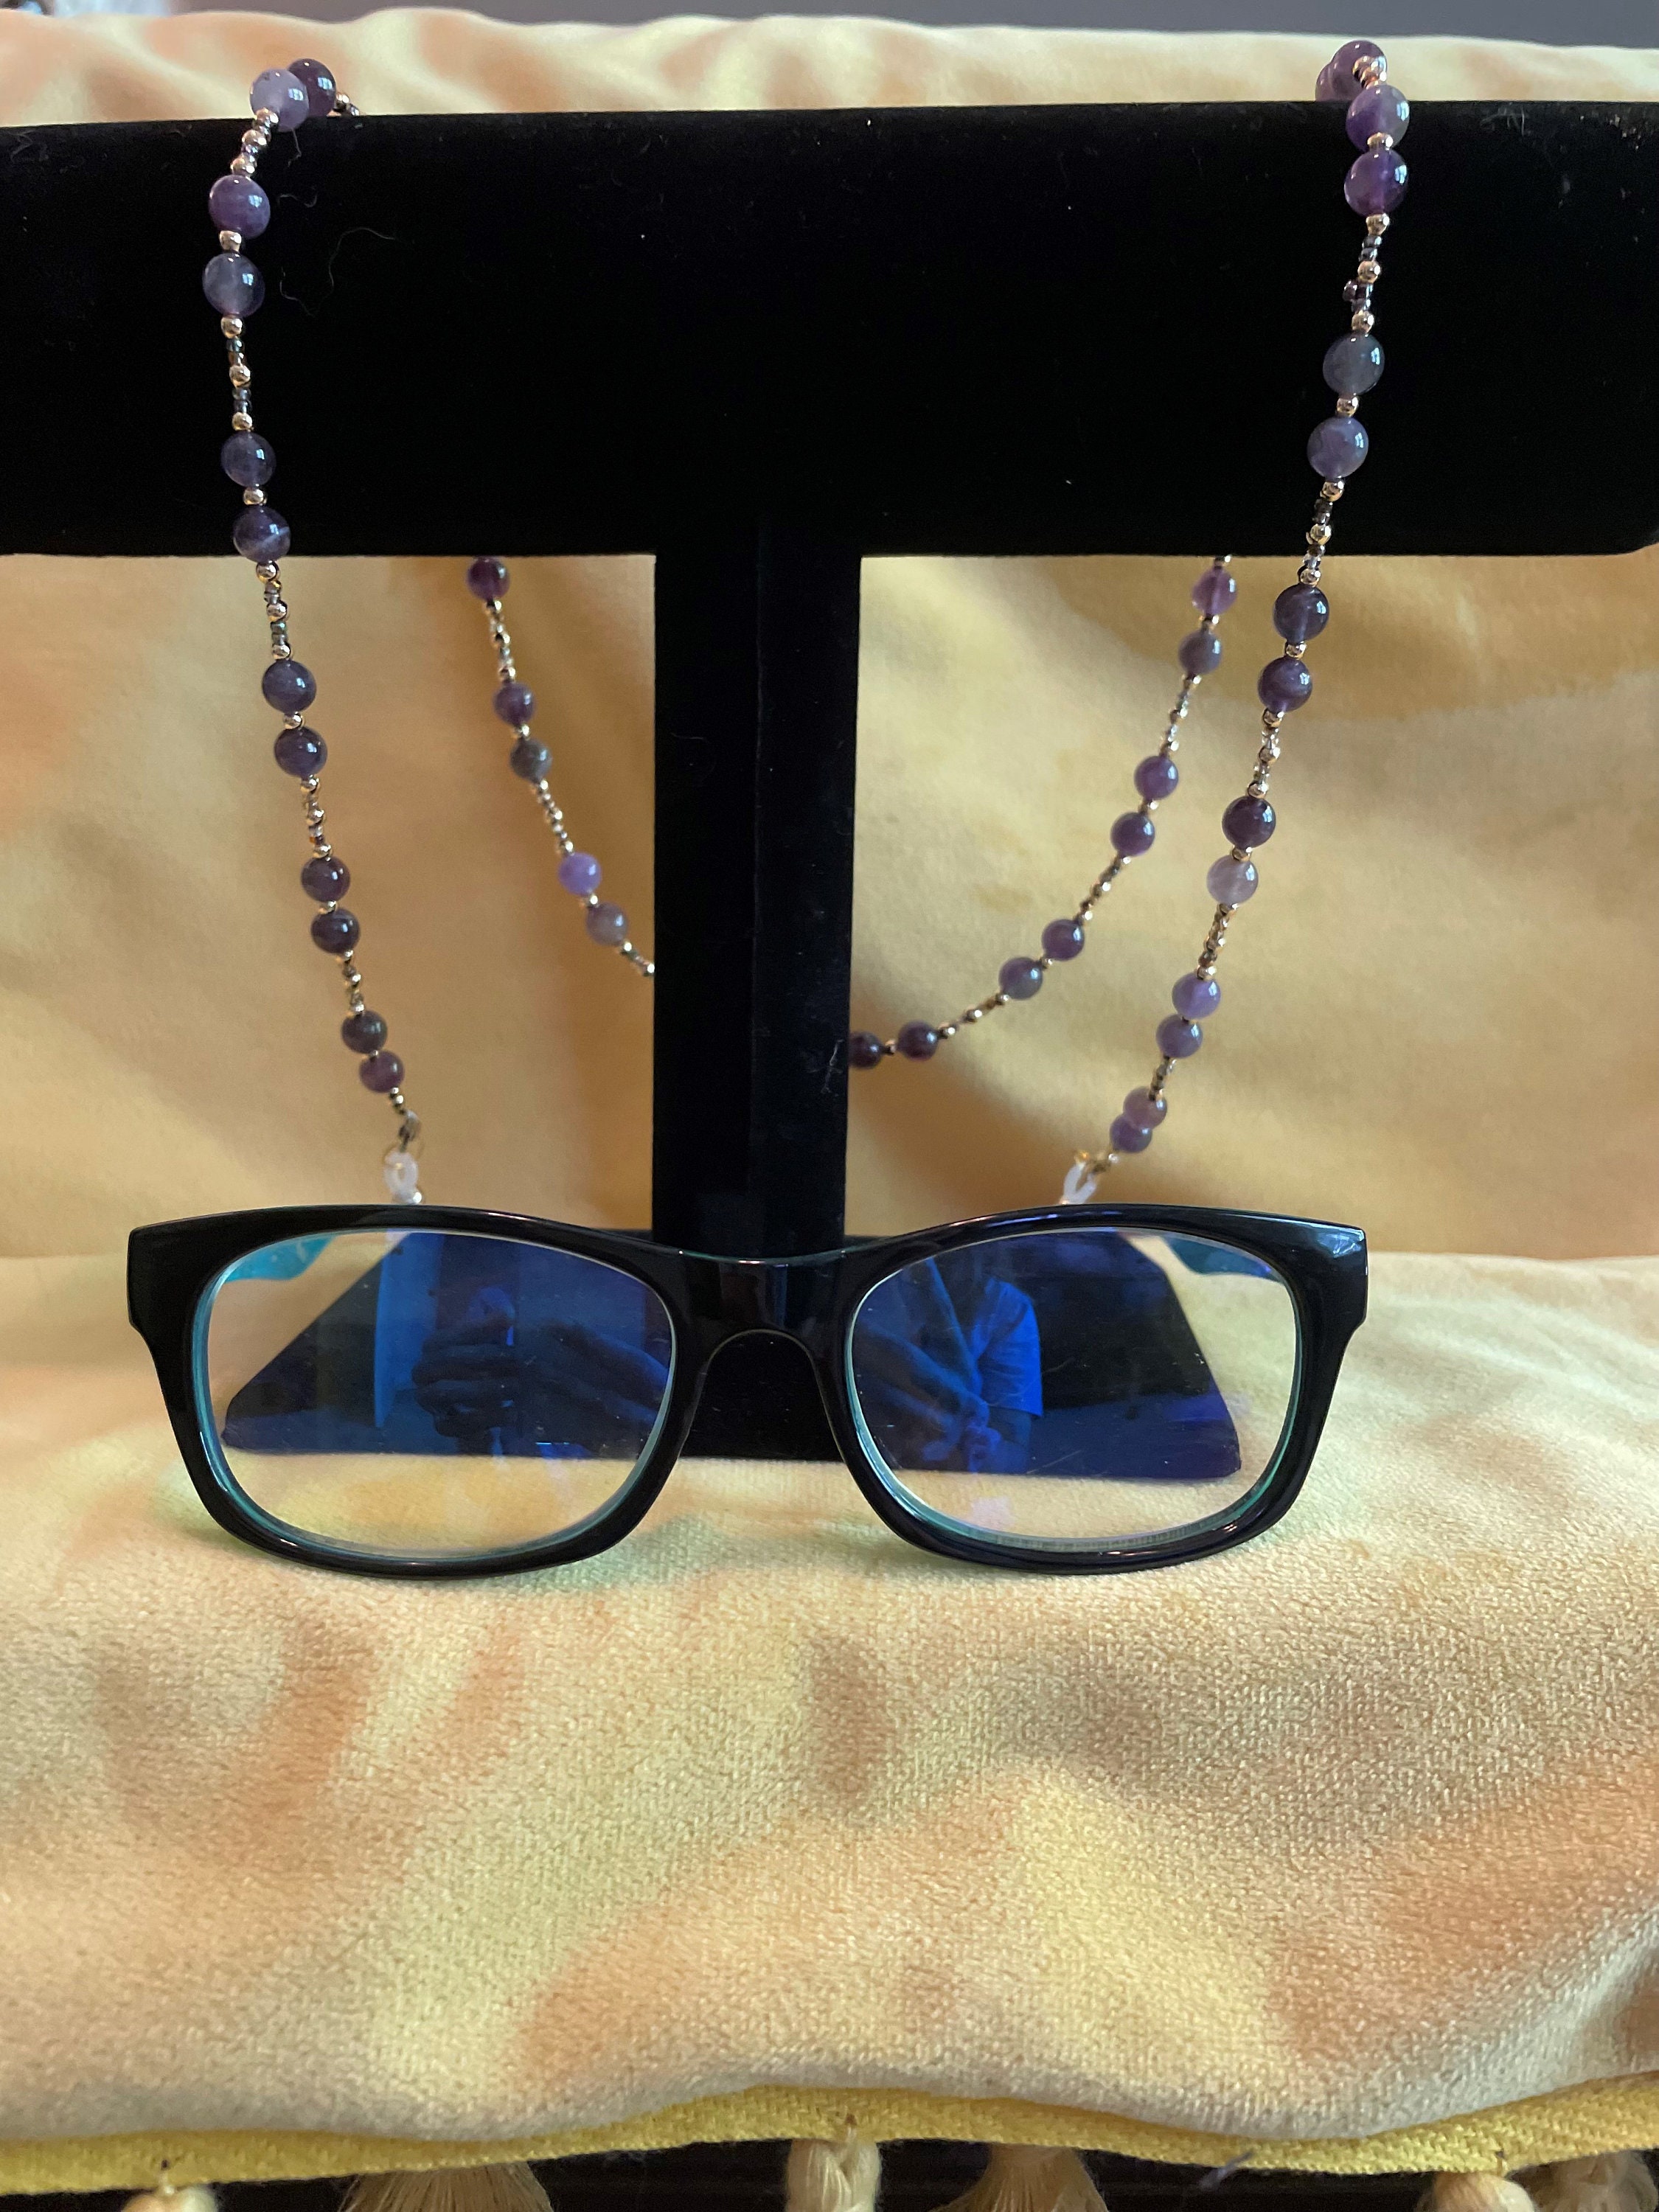 PAVOI 14K Gold Plated Sunglasses/Glasses Strap Lanyard | Glasses Chains for  Women | Gold Eye Glasses Holder Around Neck